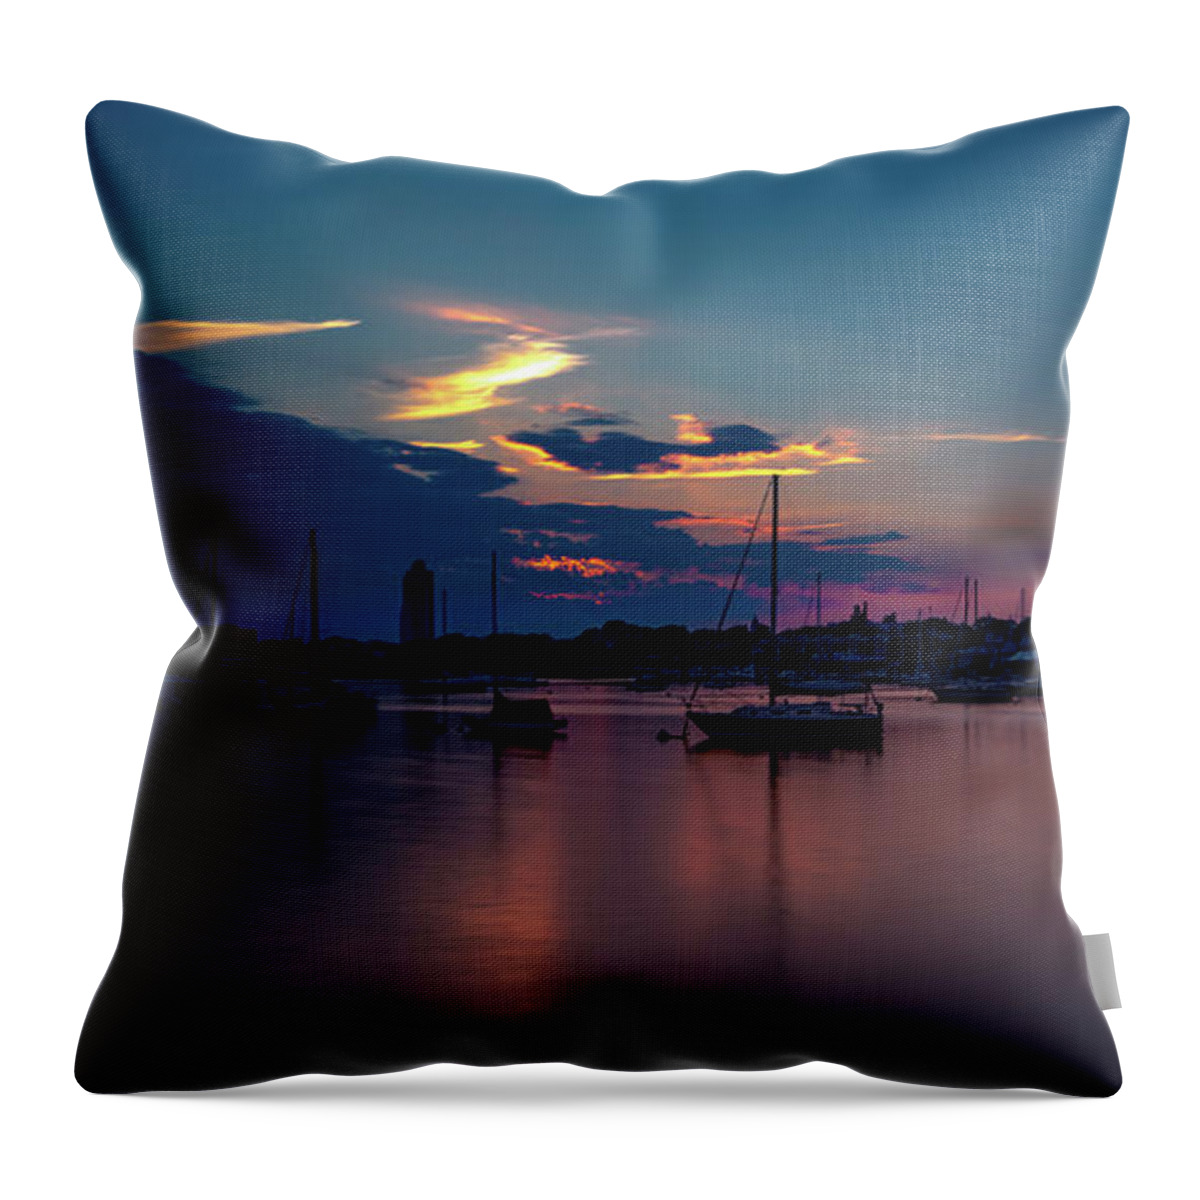 2020 Throw Pillow featuring the photograph Sunset Marina by Stef Ko